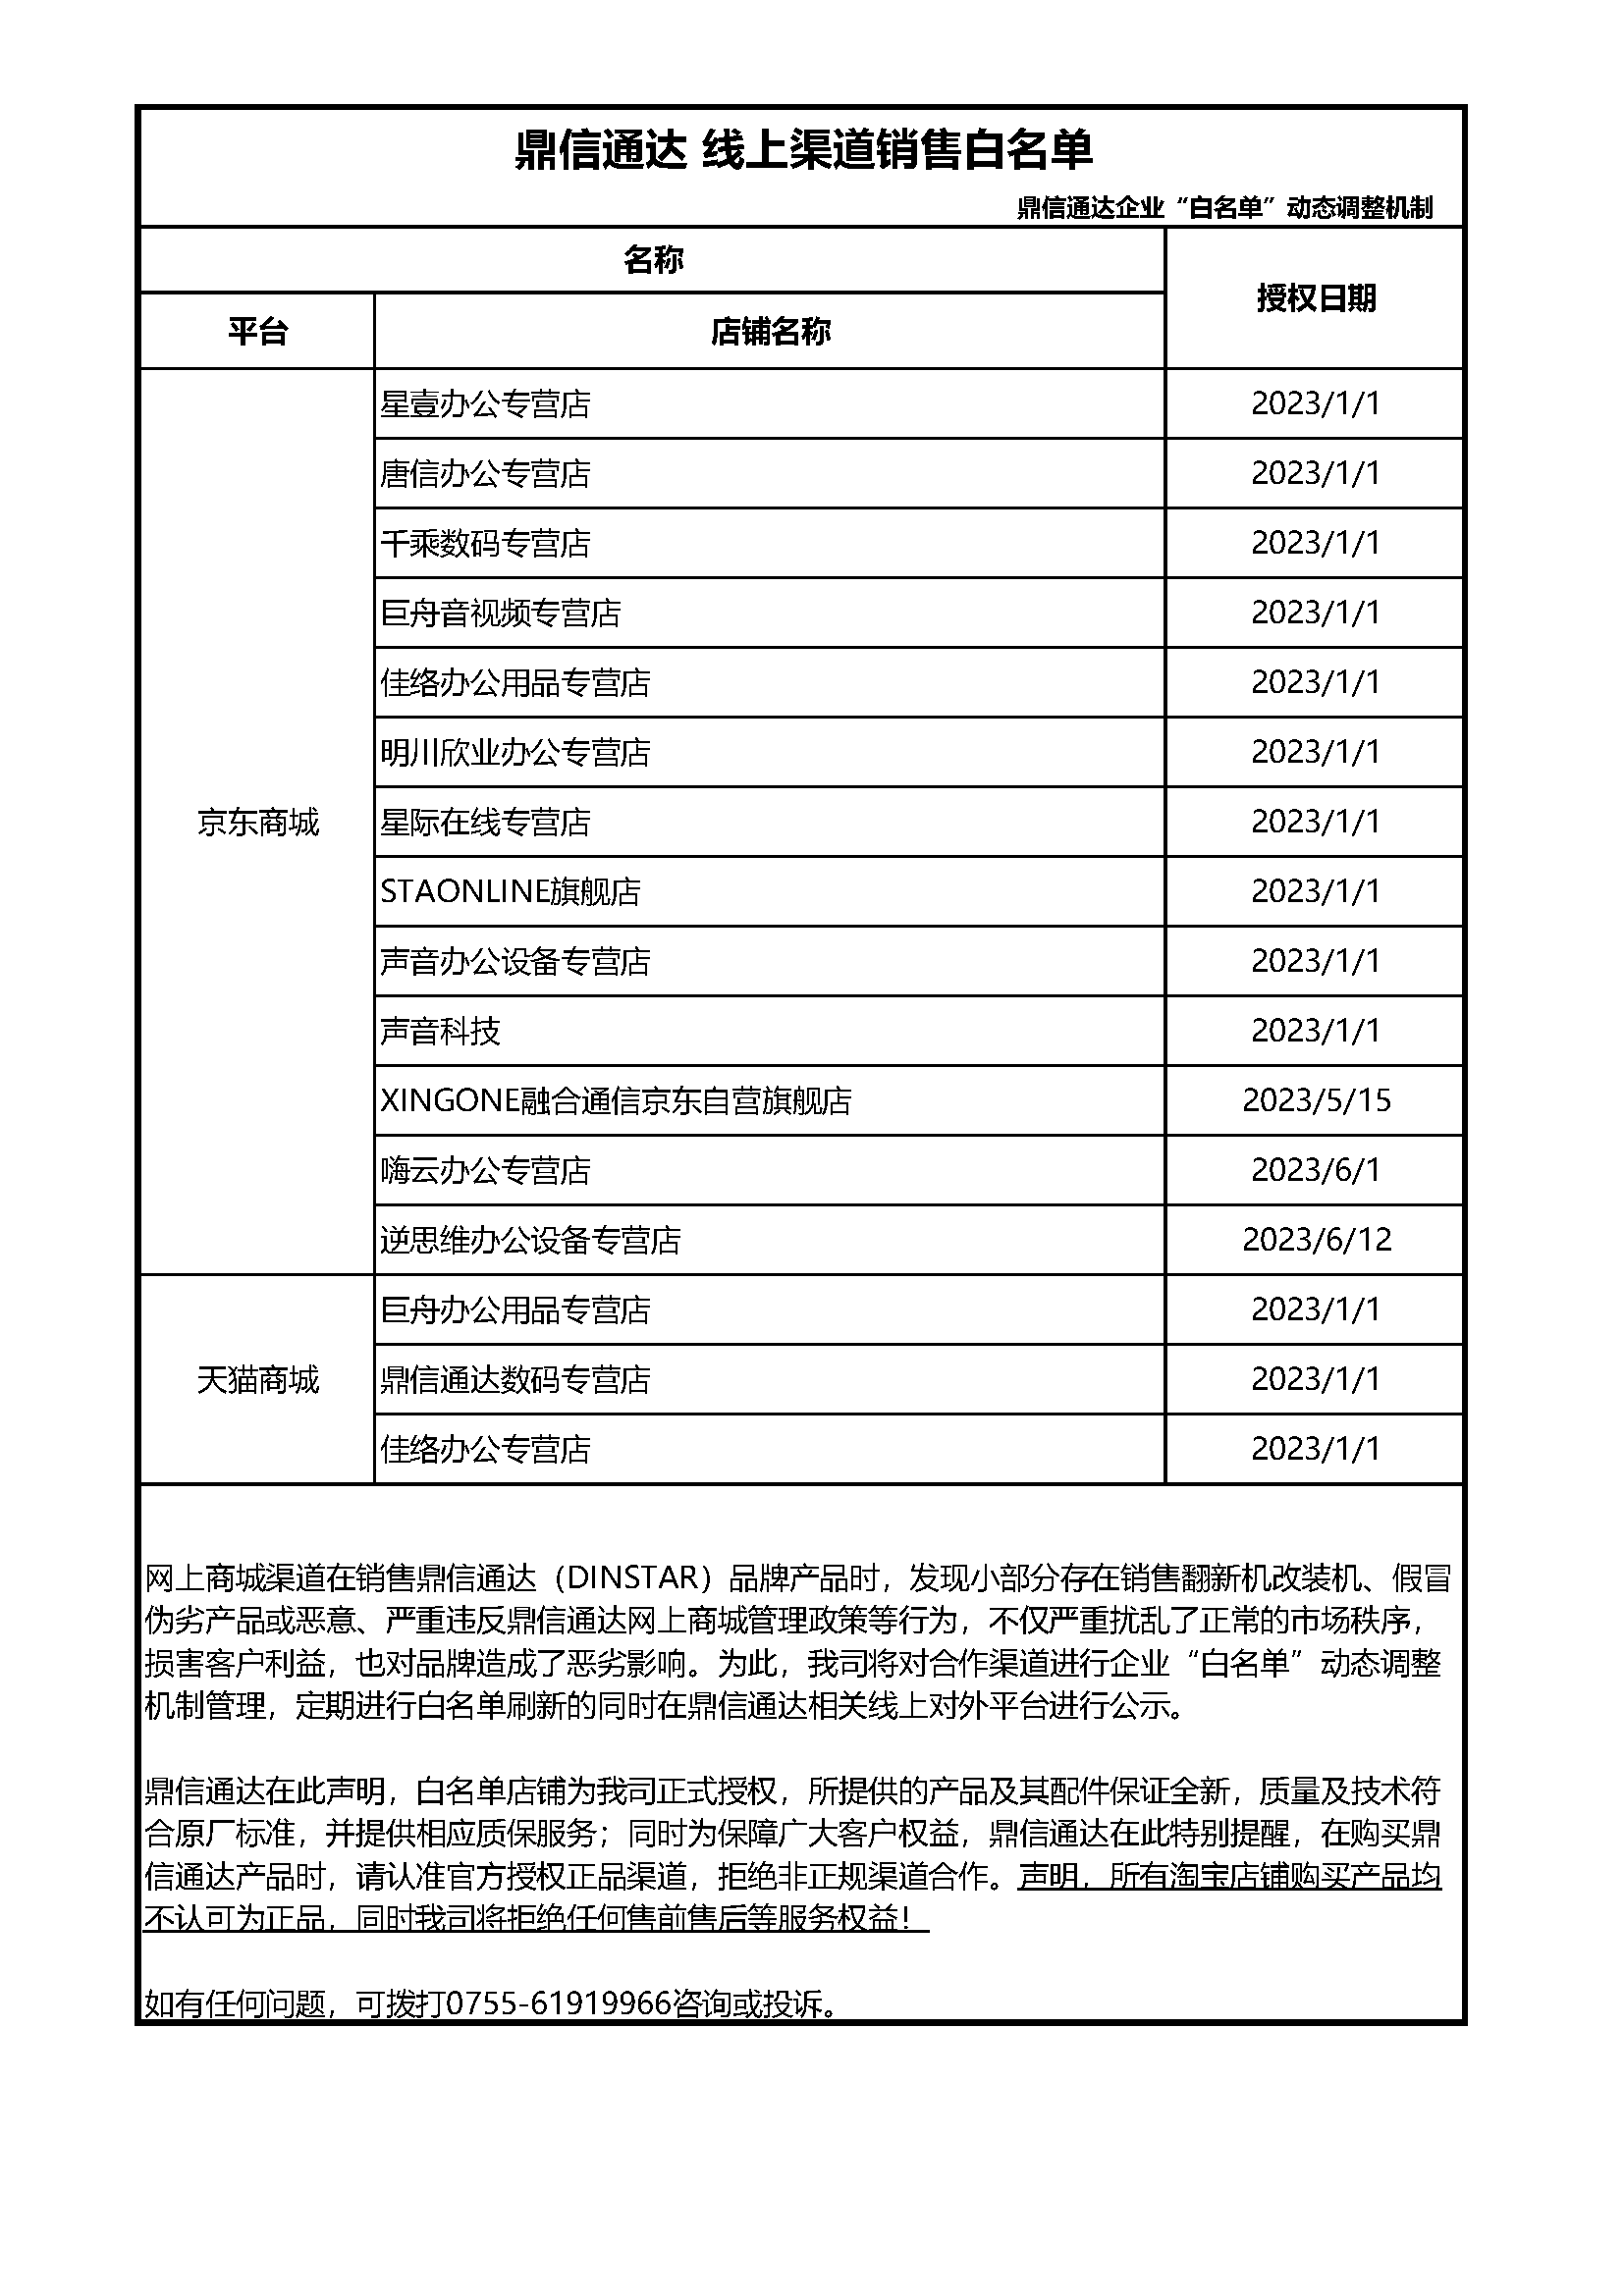 /WEB/files/12007/2021-04-01/鼎信通达 线上渠道销售白名单.png